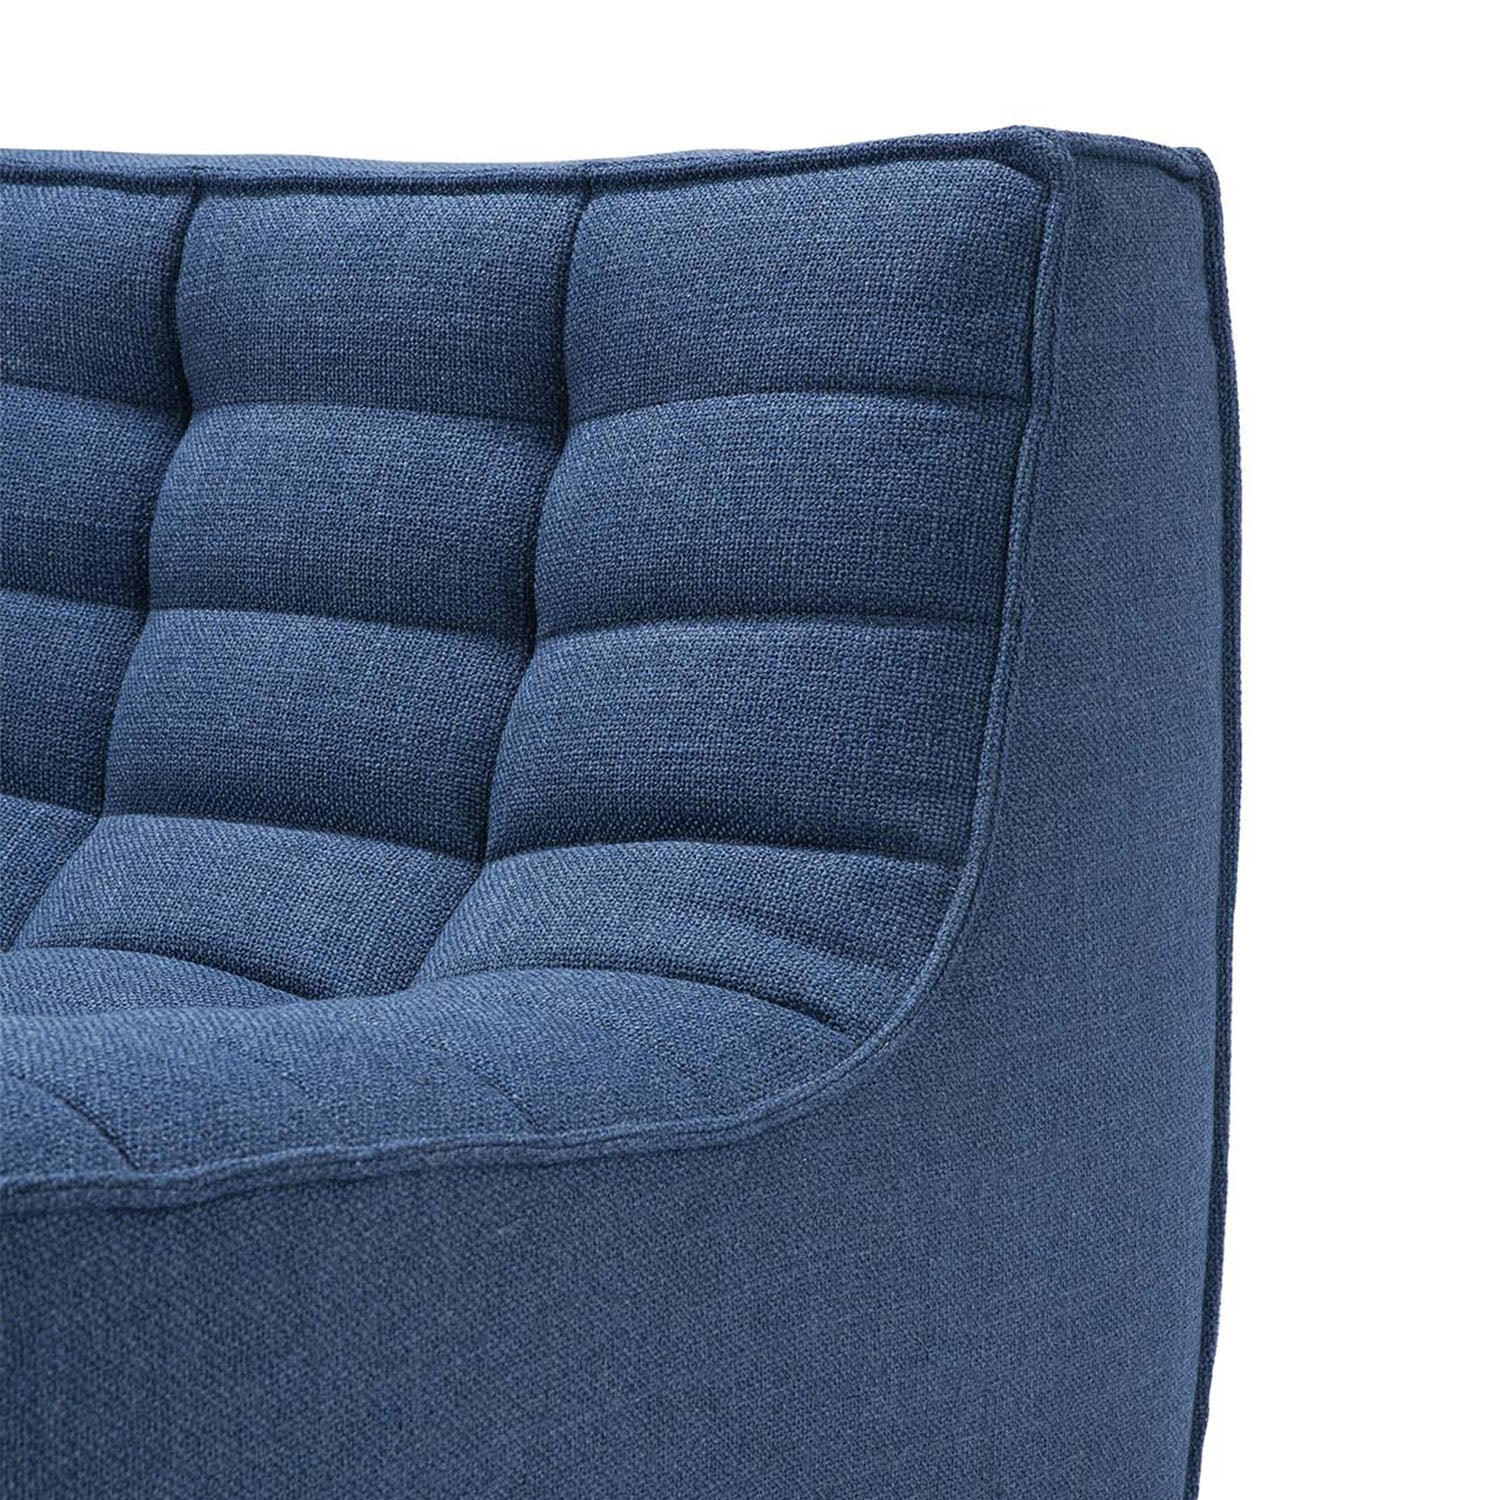 Sectional Armless Chair Blue